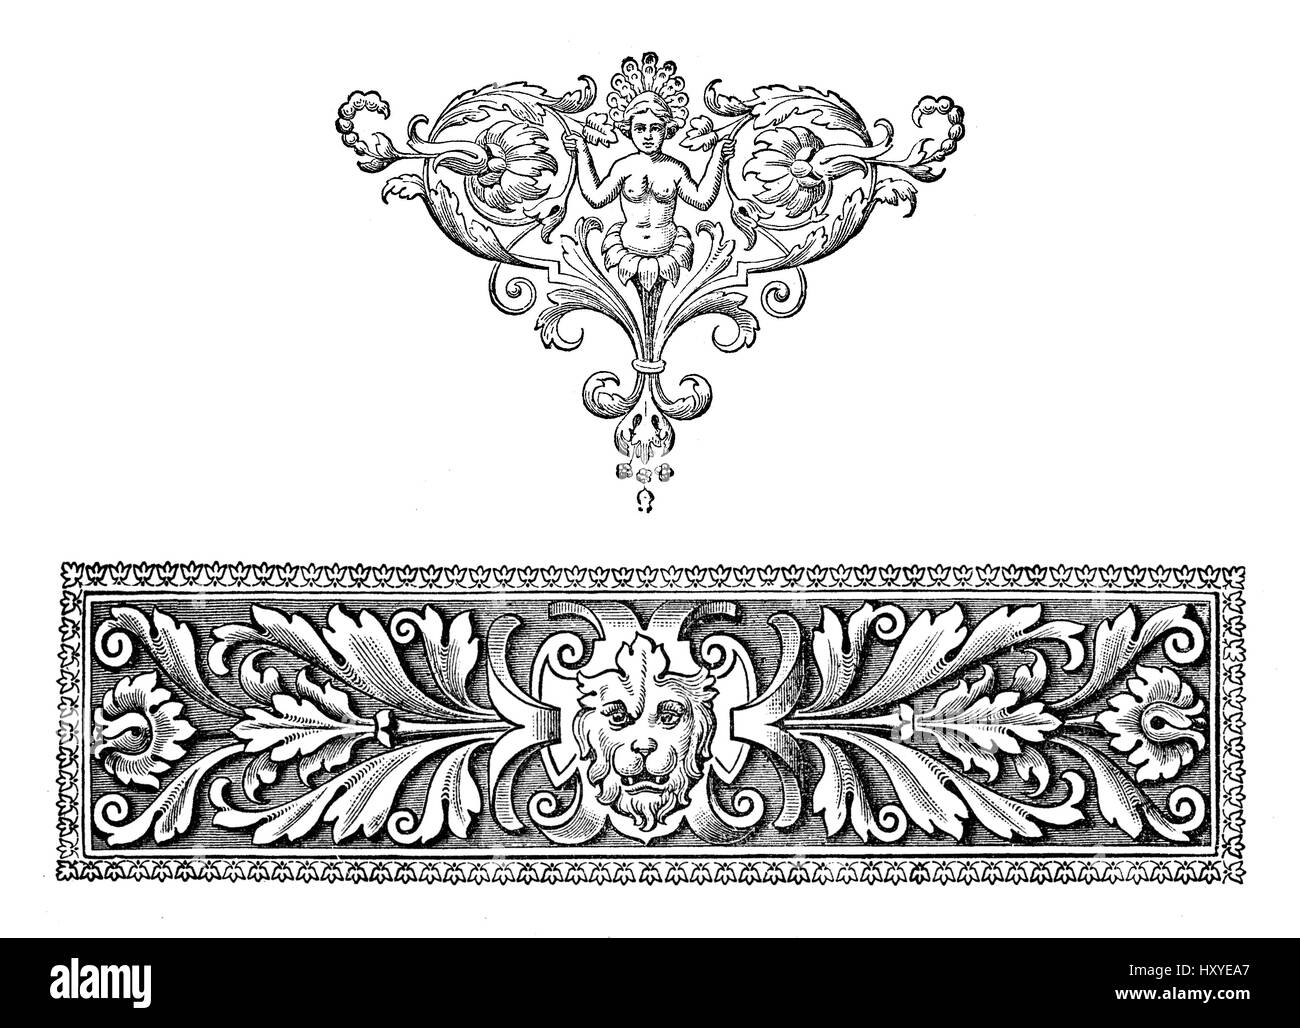 Richly decorated baroque typographic border, mythological figure and floreal motives Stock Photo